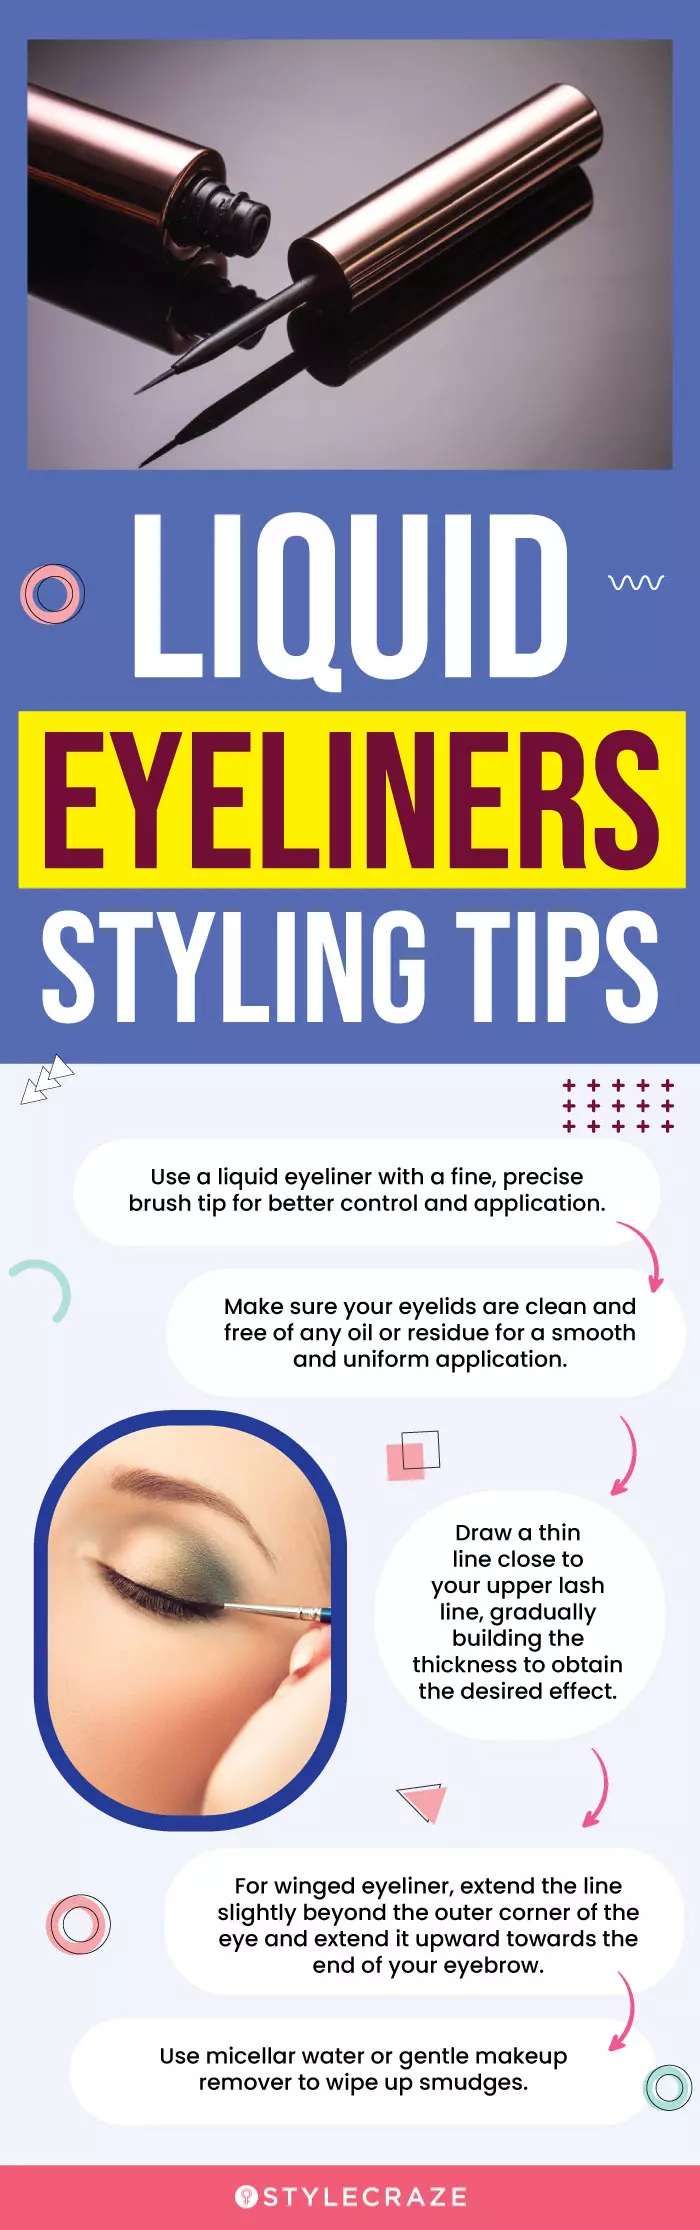 Liquid Eyeliners Styling Tips (infographic)